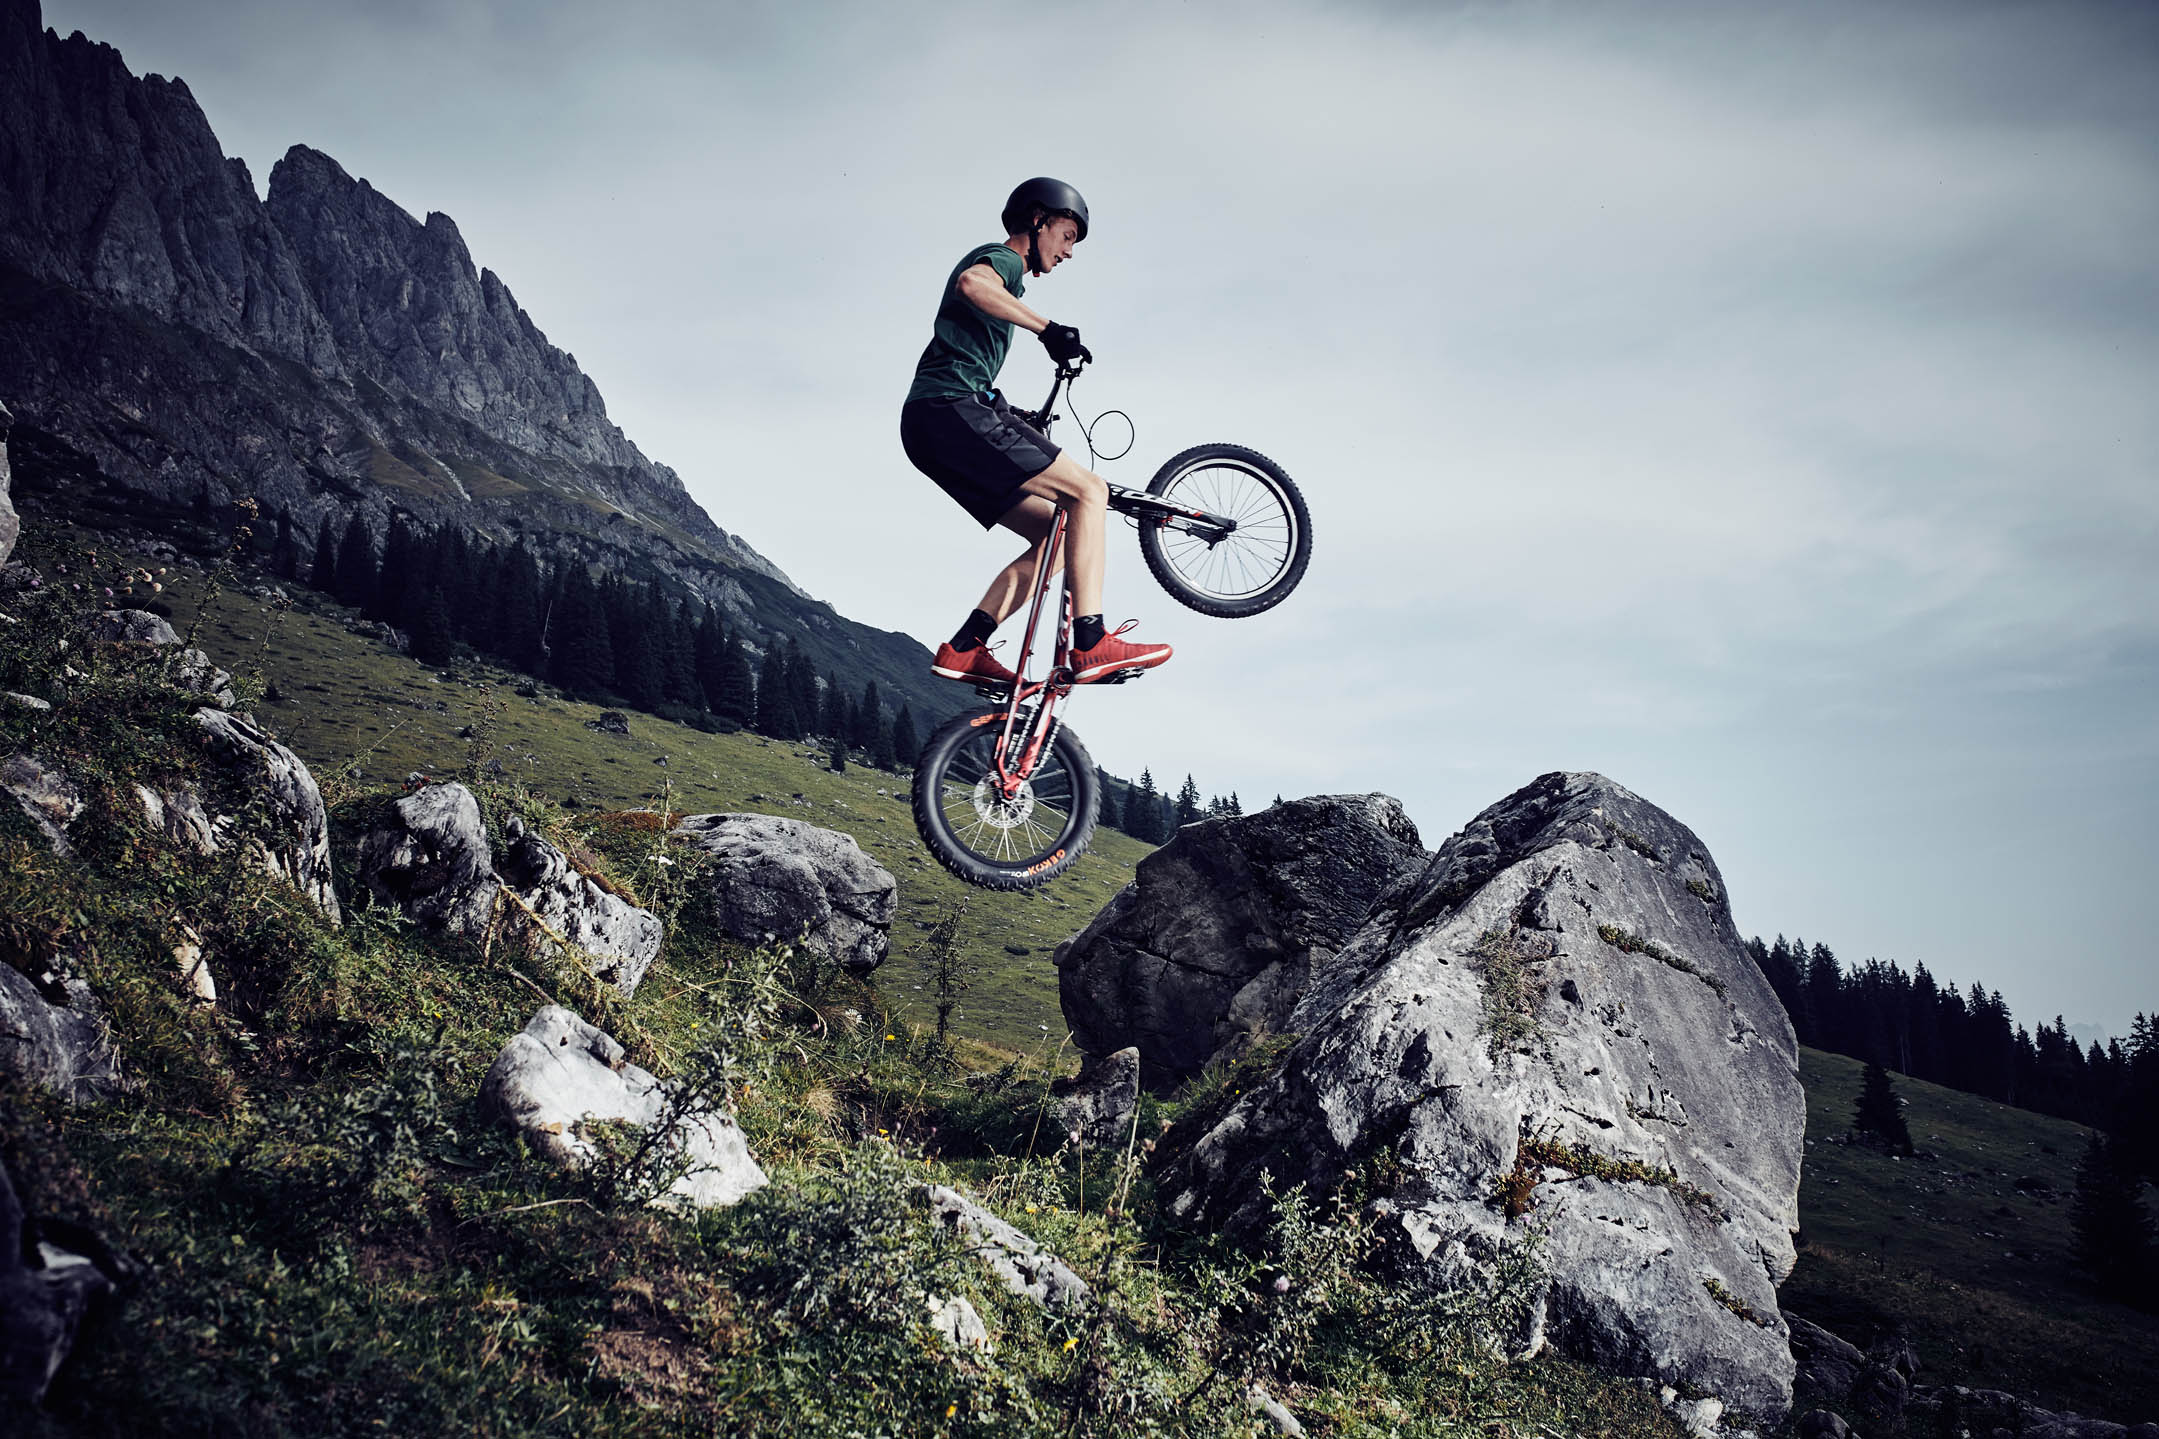 Thomas Klausner am Fahrrad im Gebirge